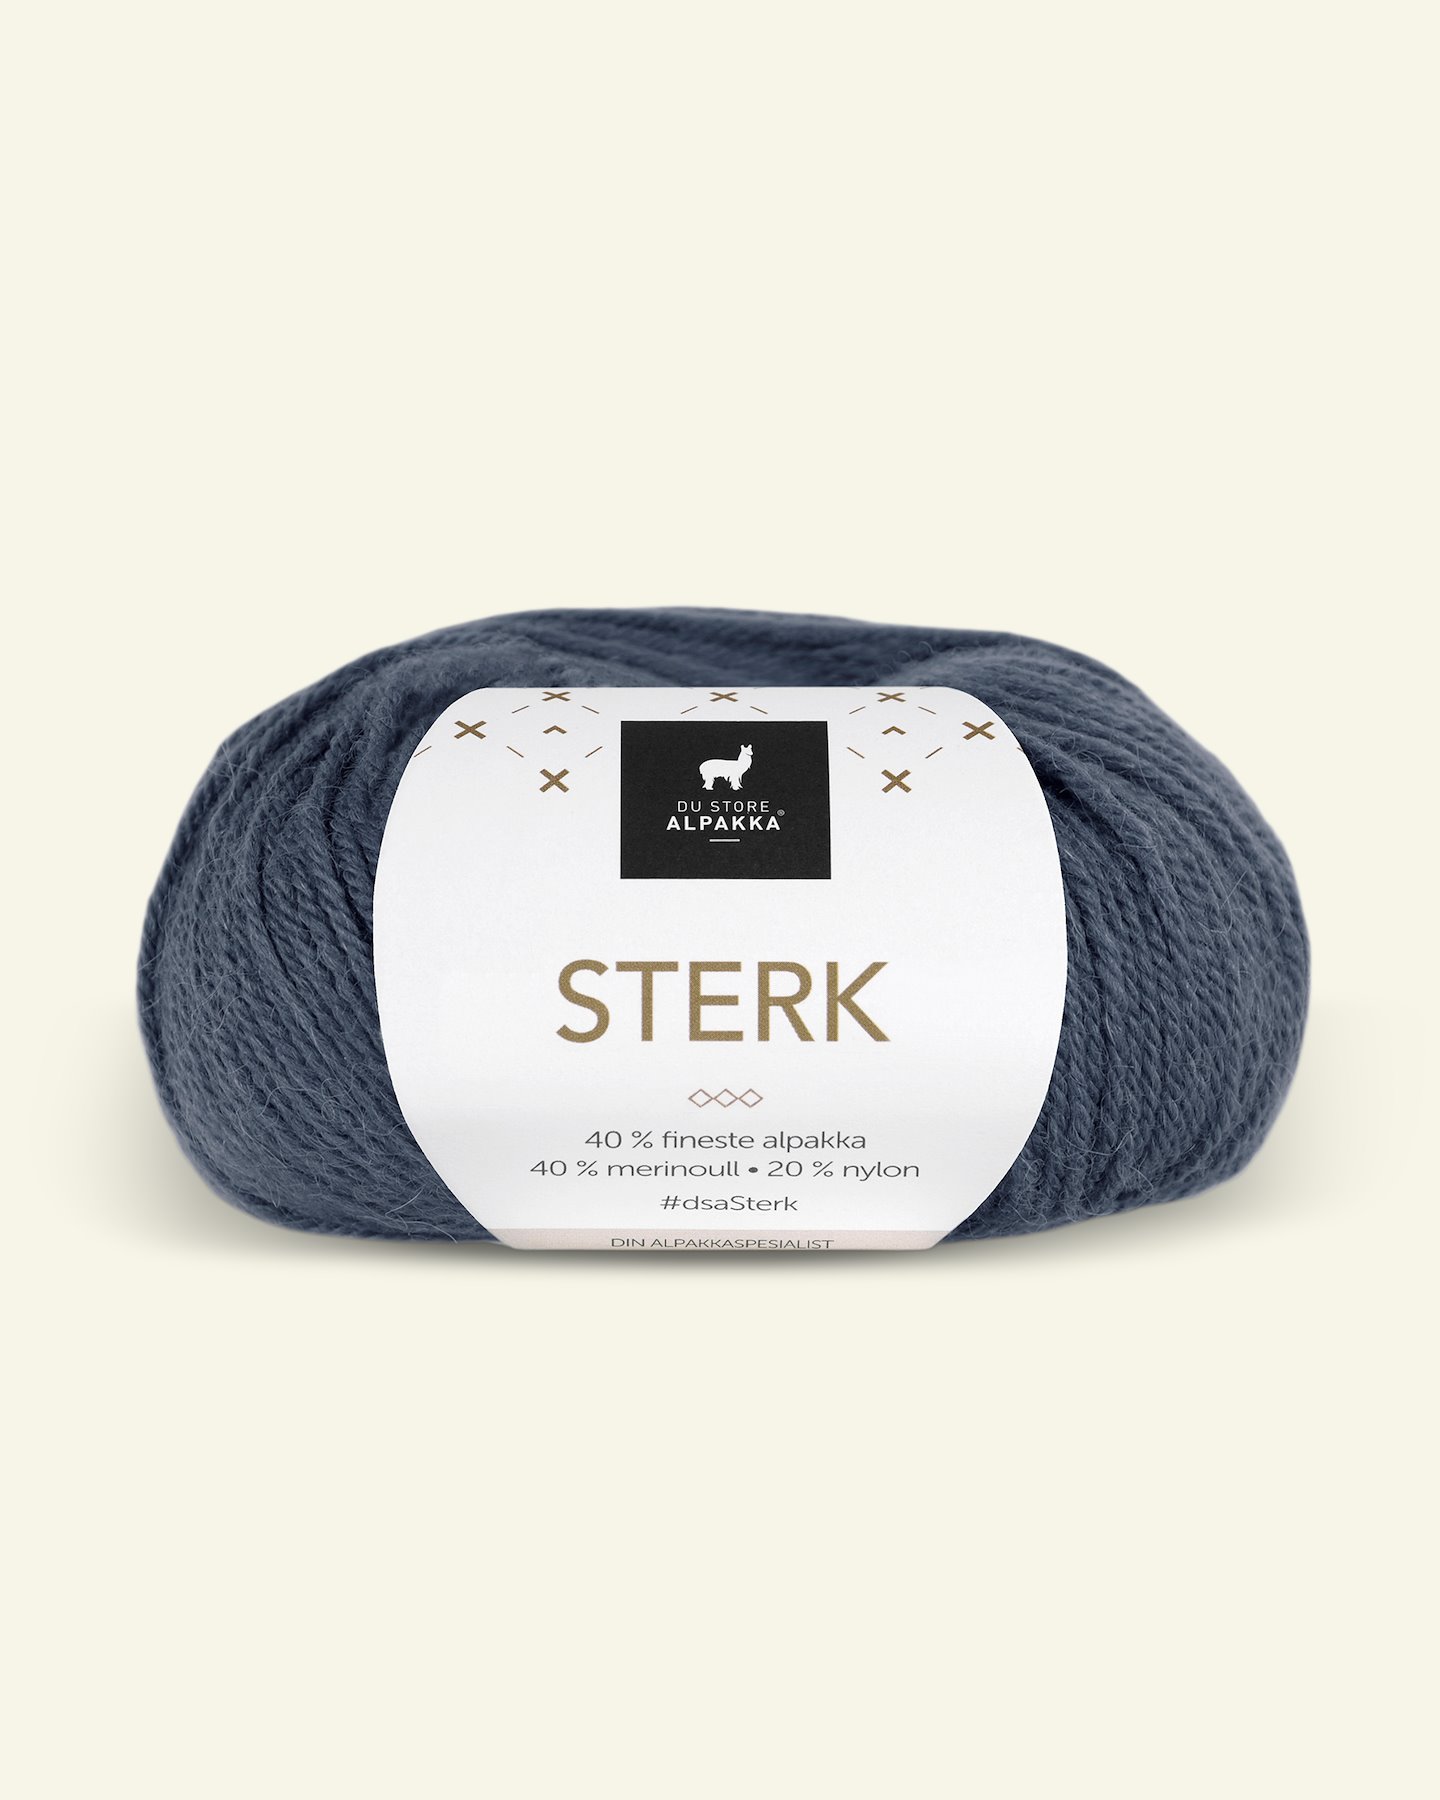 Du Store Alpakka, alpaca merino mixed yarn "Sterk", dark greyblue (861) 90000683_pack